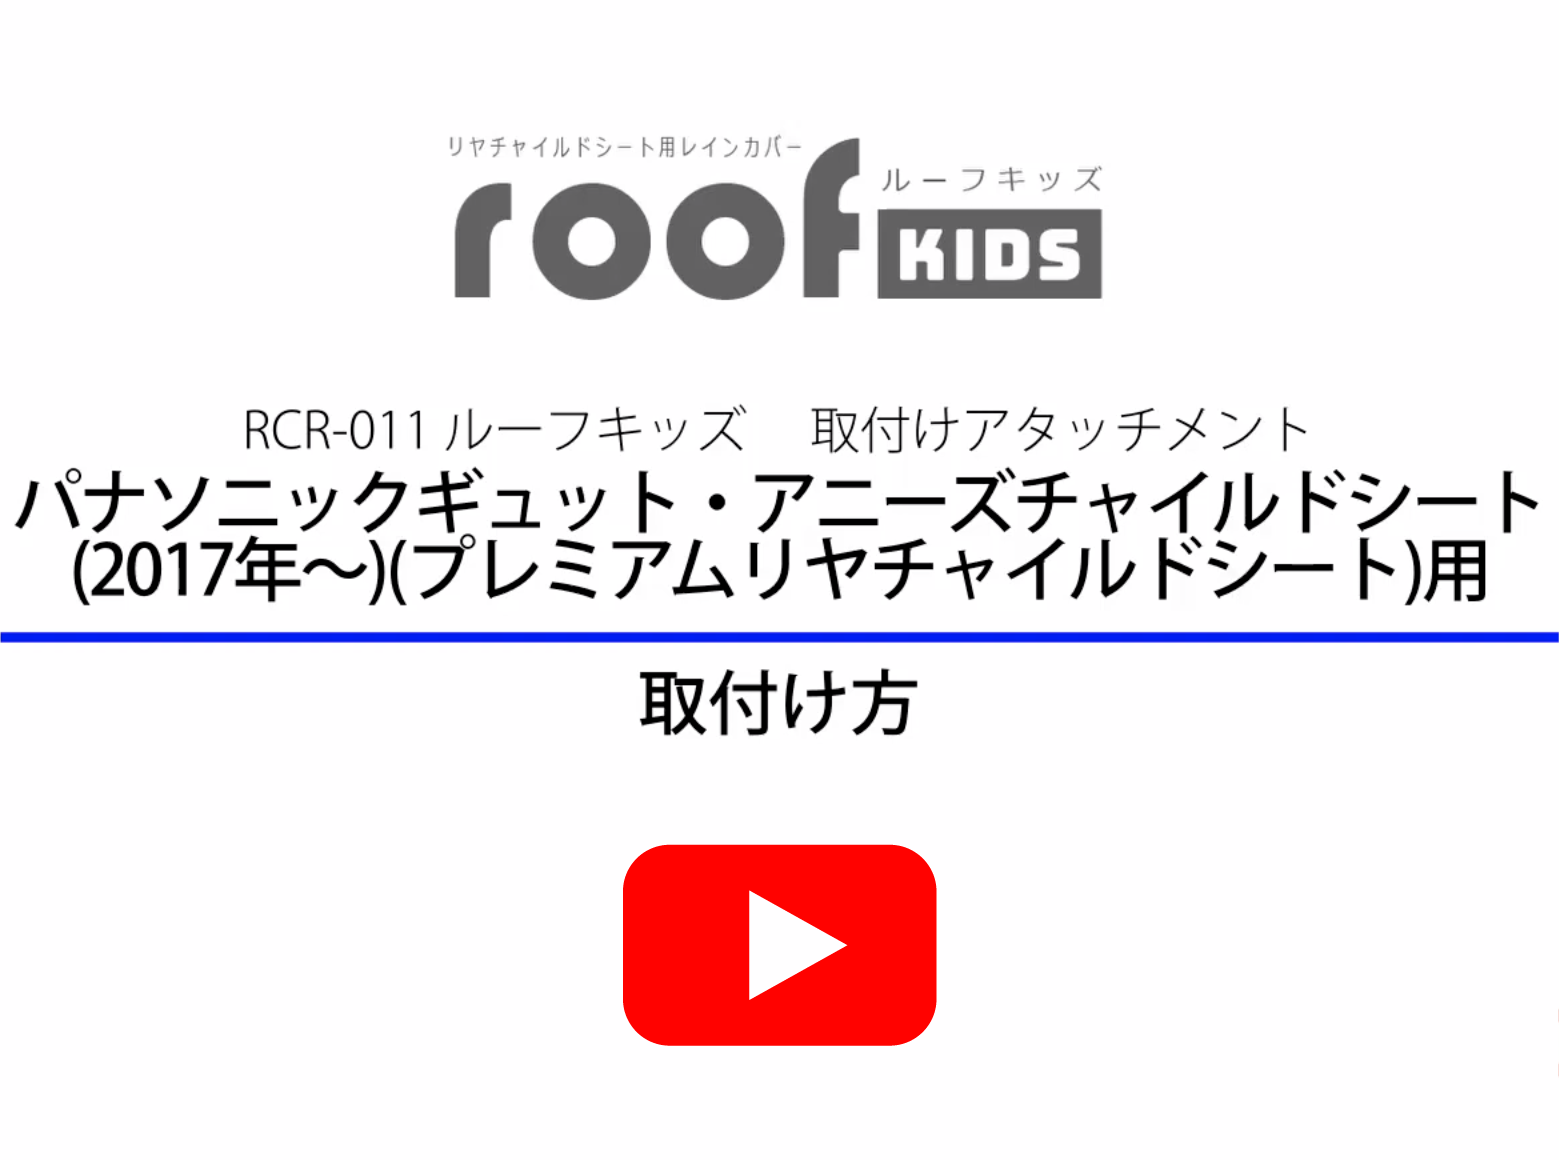 RCR-011 roof kids(ルーフキッズ)   ブラウン